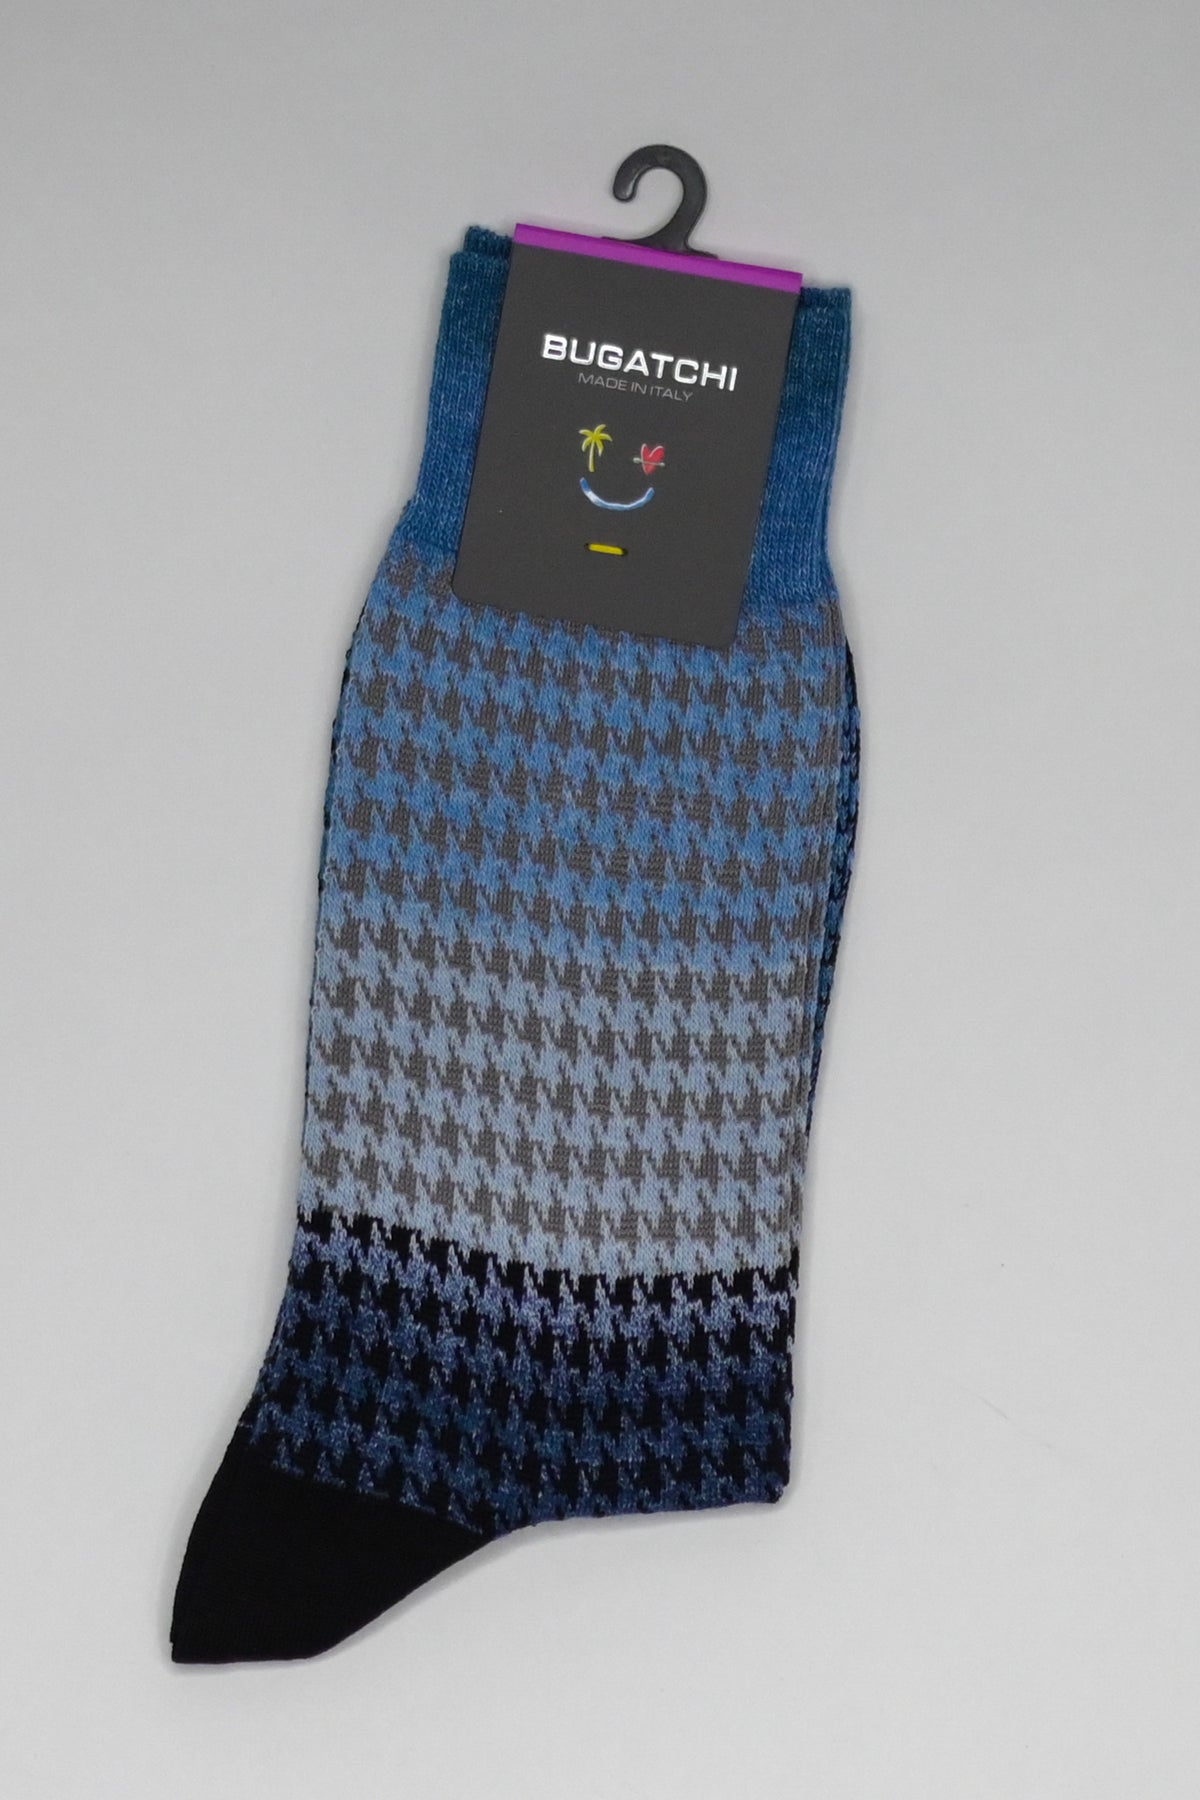 Bugatchi Socks